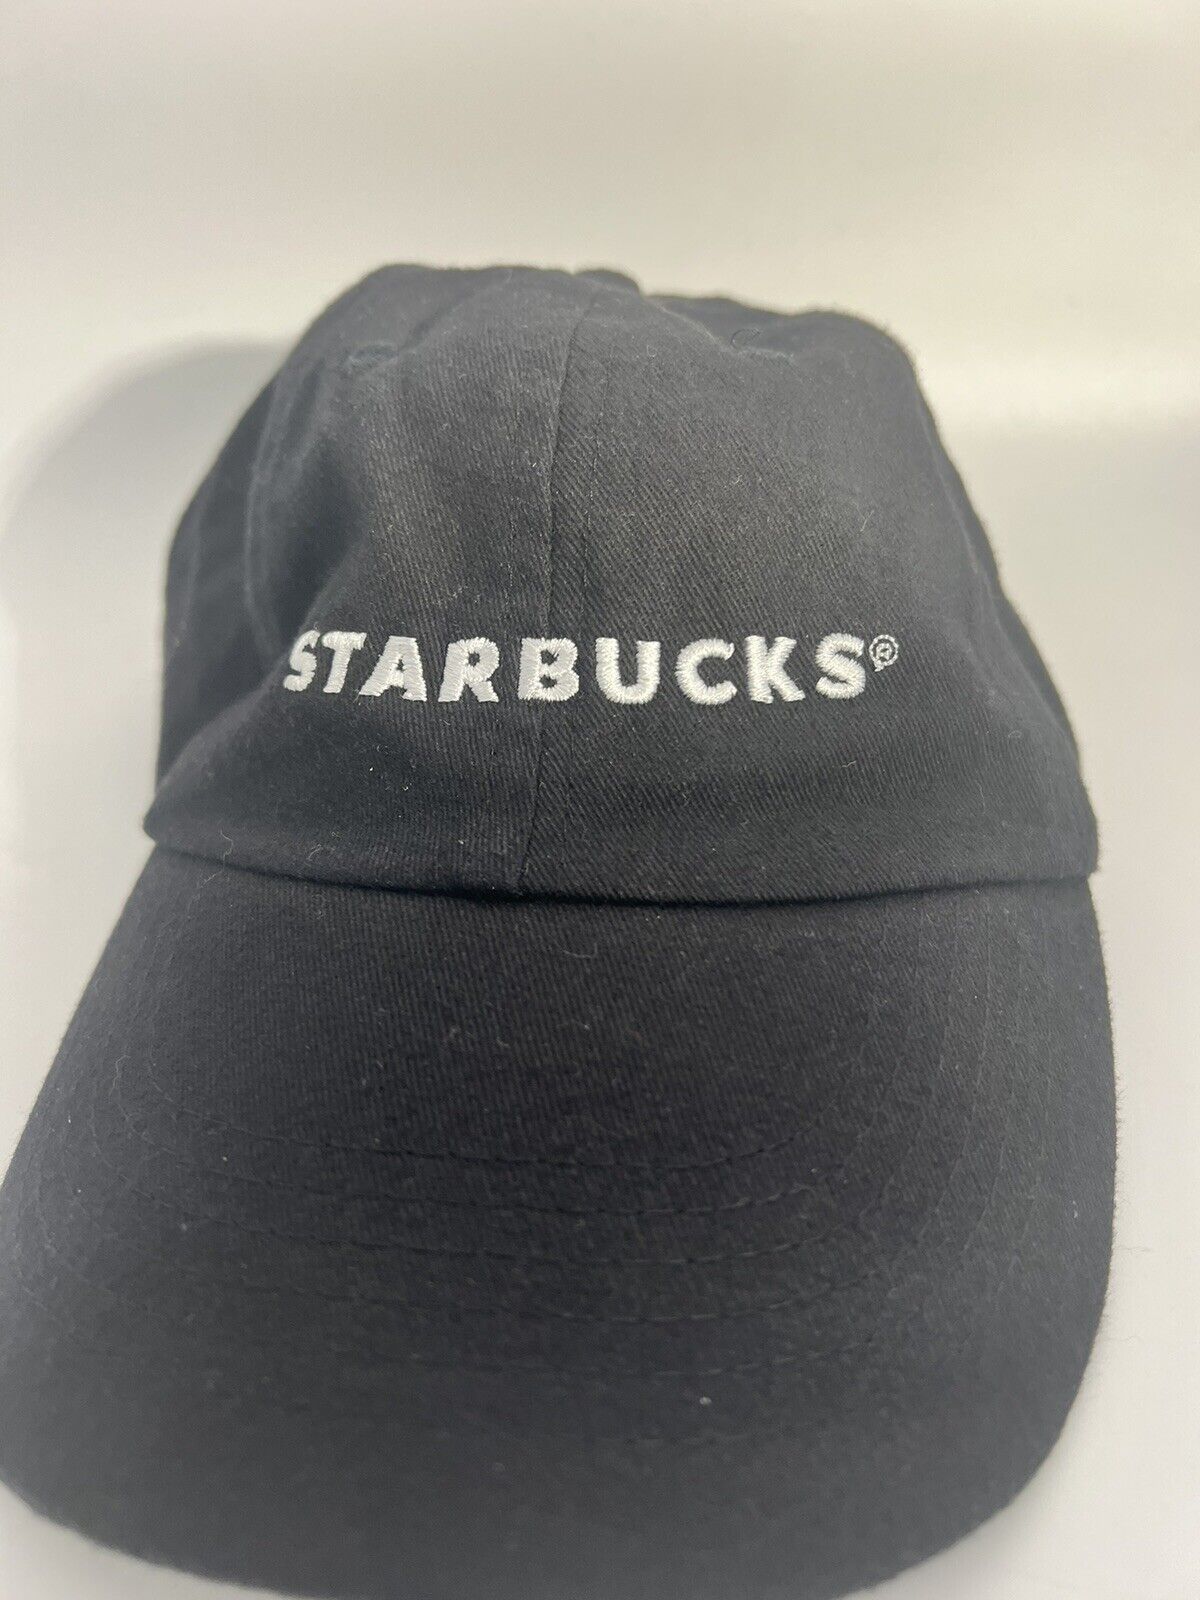 Starbucks Employee Worker Uniform Strap back Black Cap Hat - Adjustable Size Hat